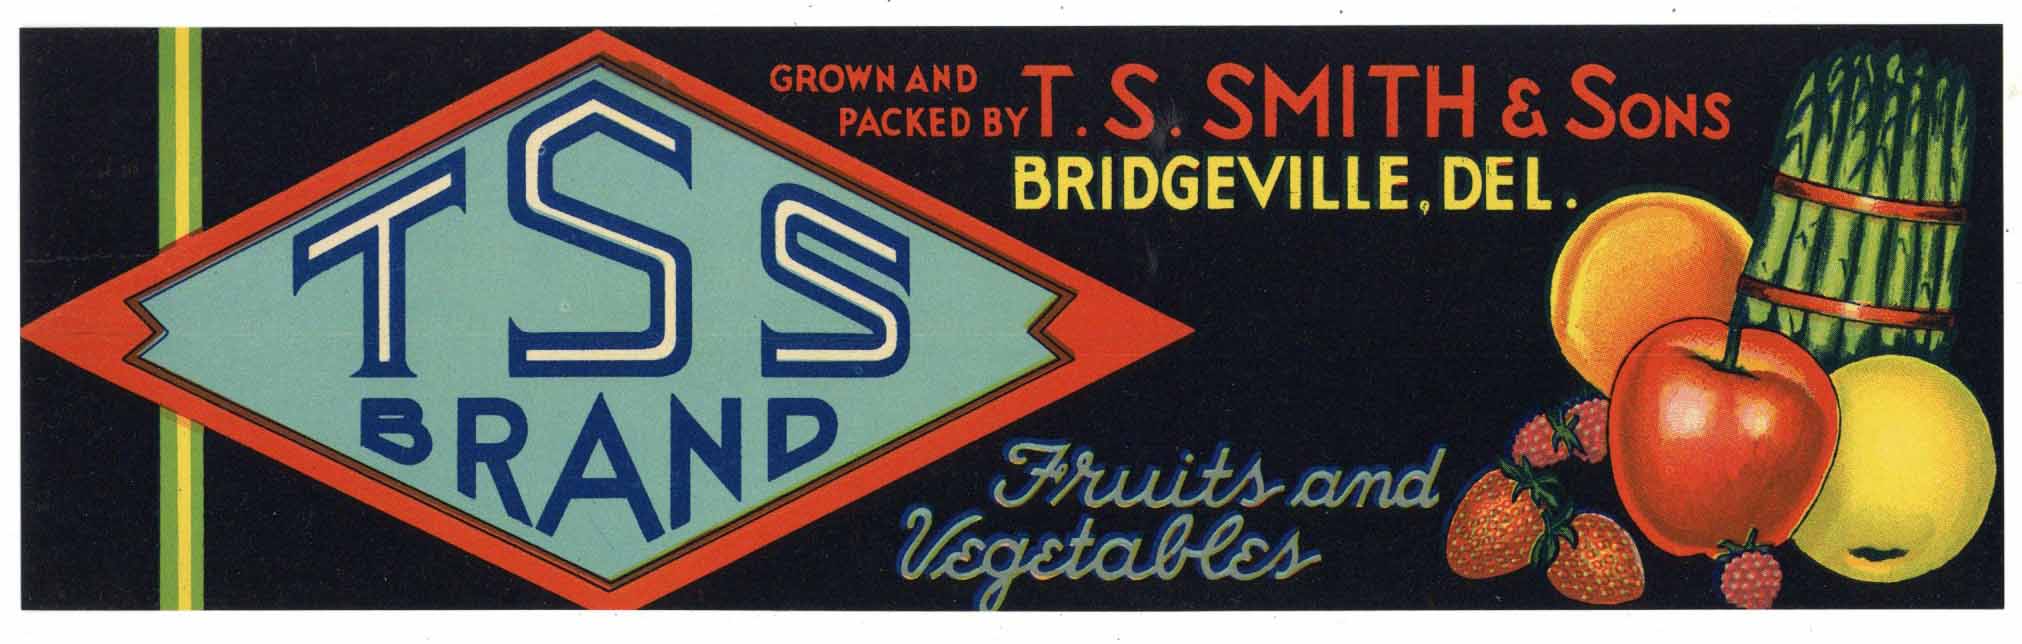 TSS Brand Vintage Bridgeville Delaware Produce Crate Label